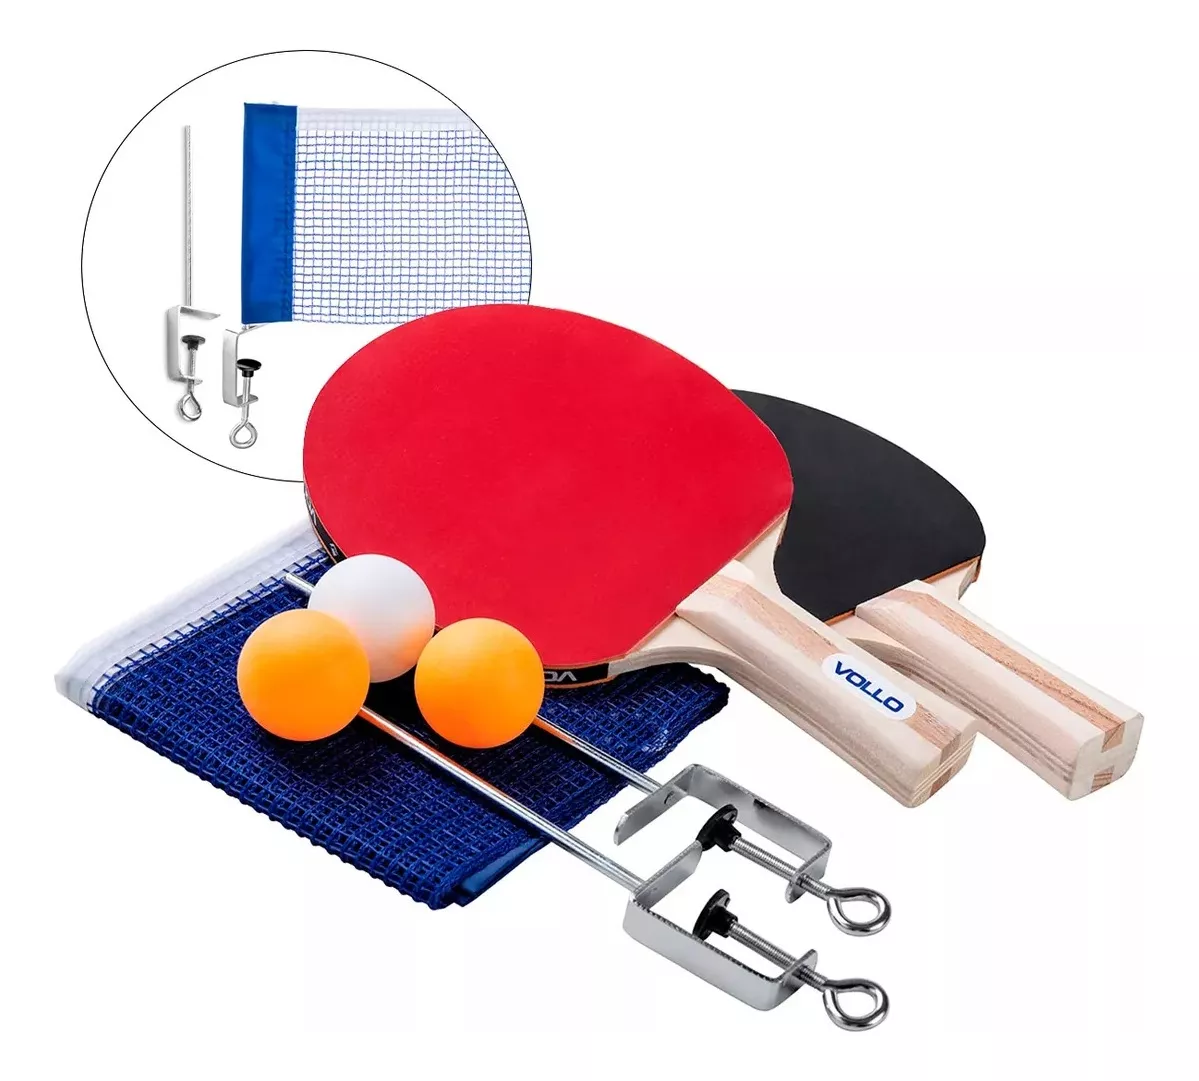 Segunda imagem para pesquisa de kit ping pong